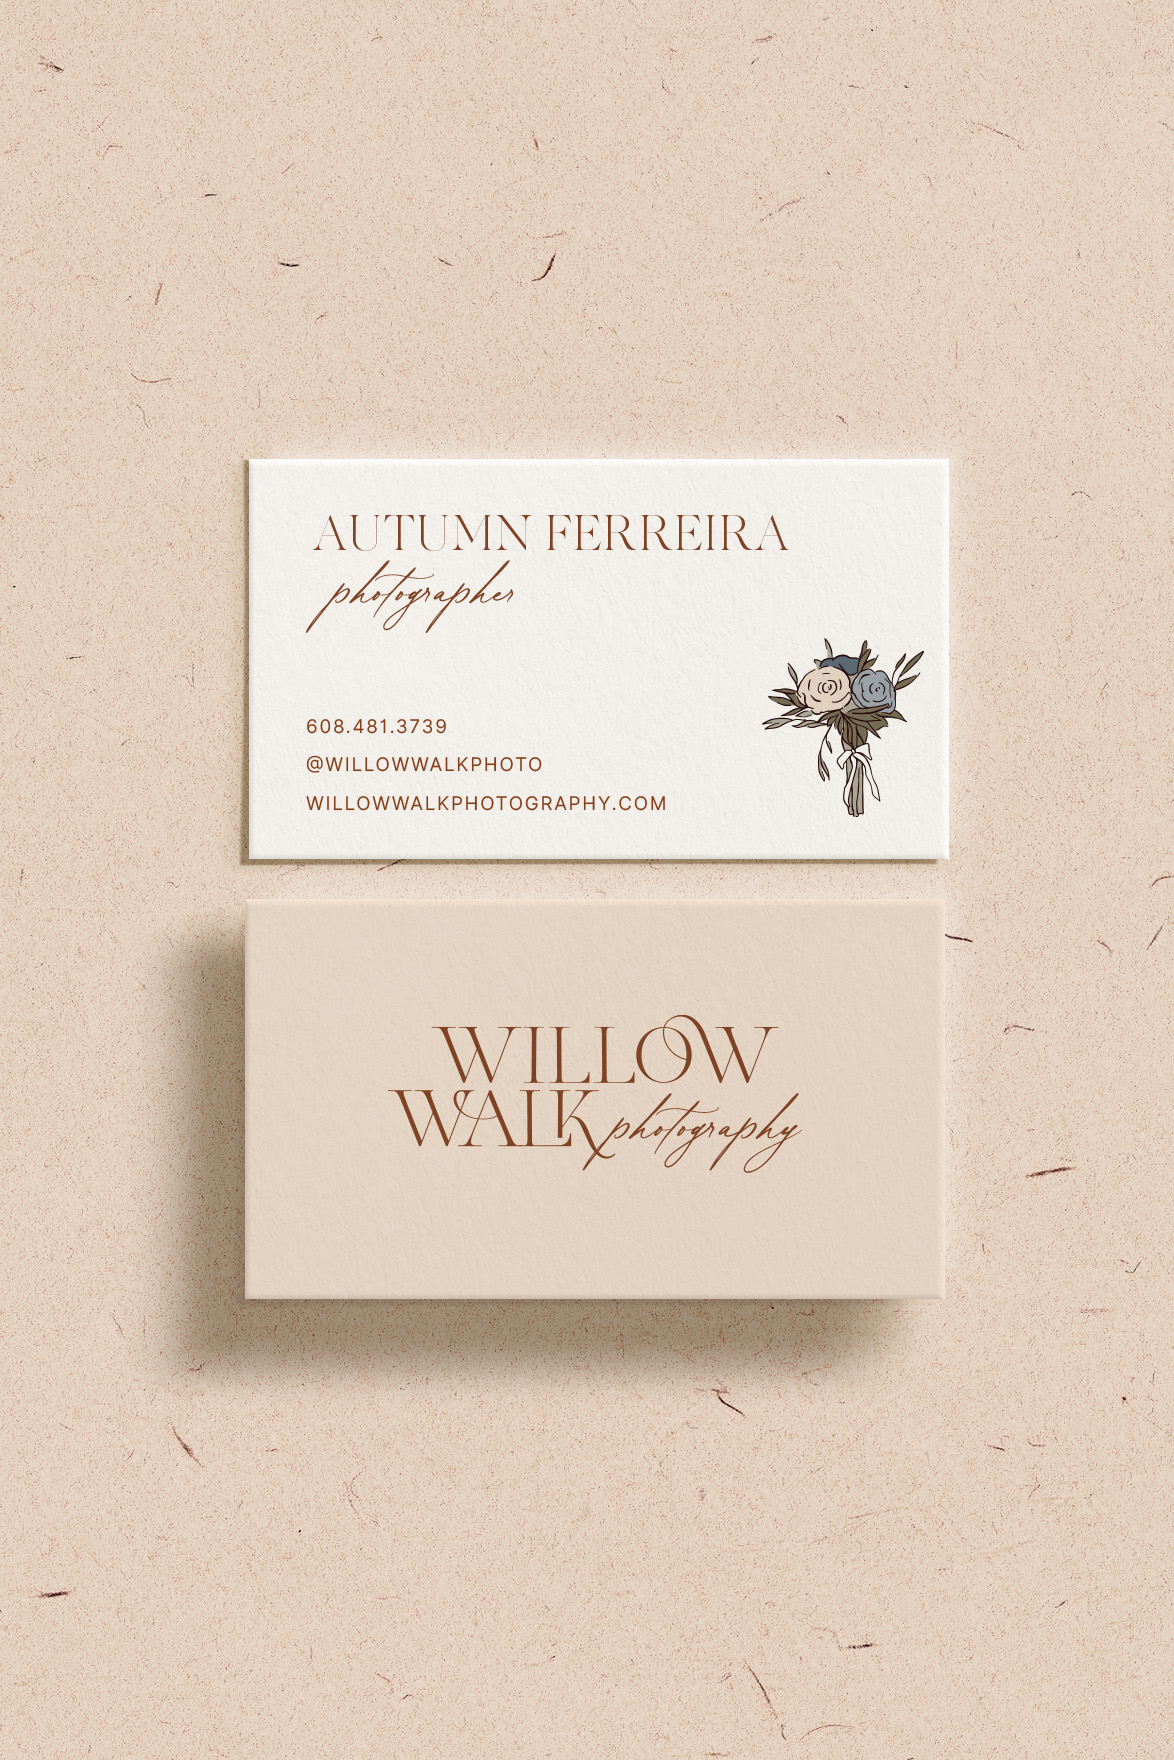 Brand Design for Photographer Willow Walk